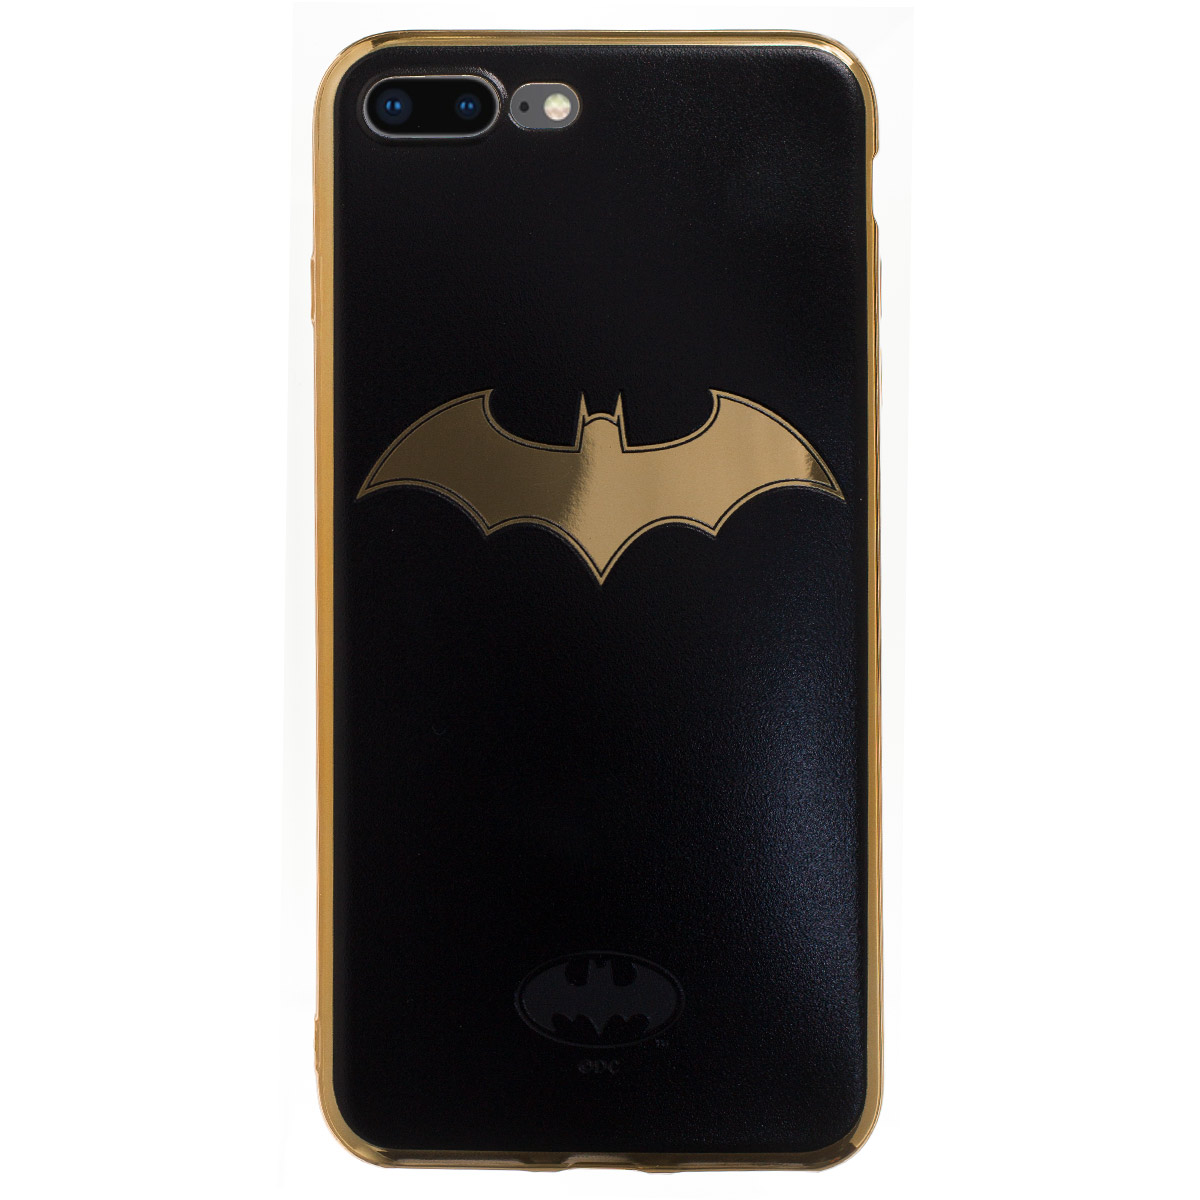 Husa Silicon iPhone 7/8 Plus, Batman Auriu thumb